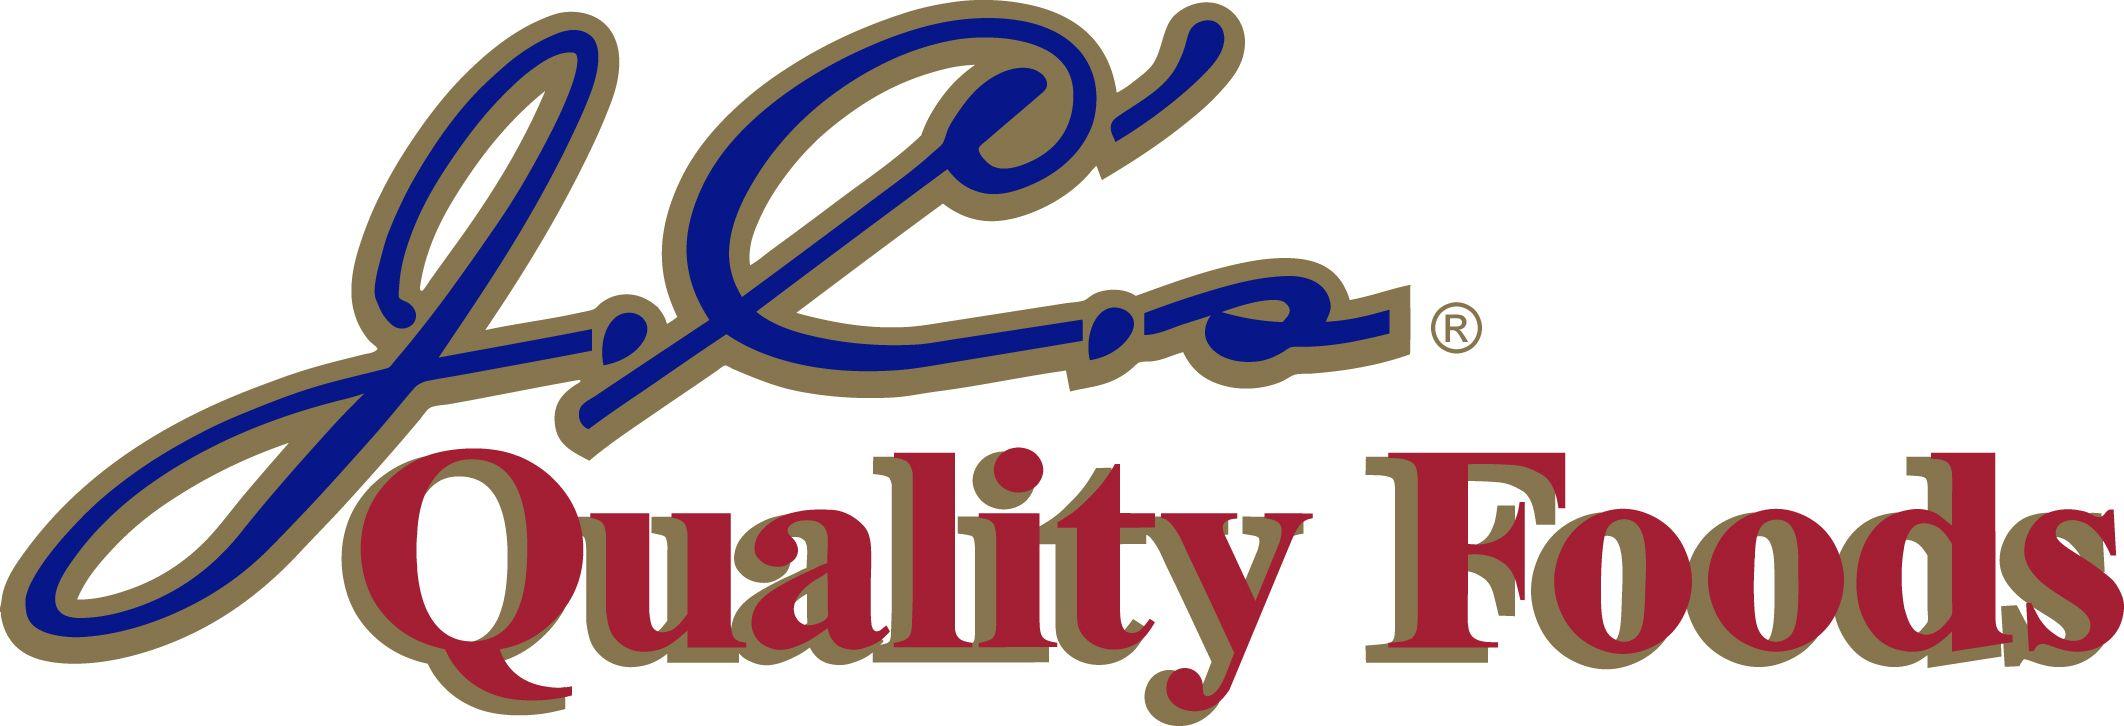 Quality Foods Logo - J.C'S Quality Foods Pty Ltd | Member | RSPO - Roundtable on ...